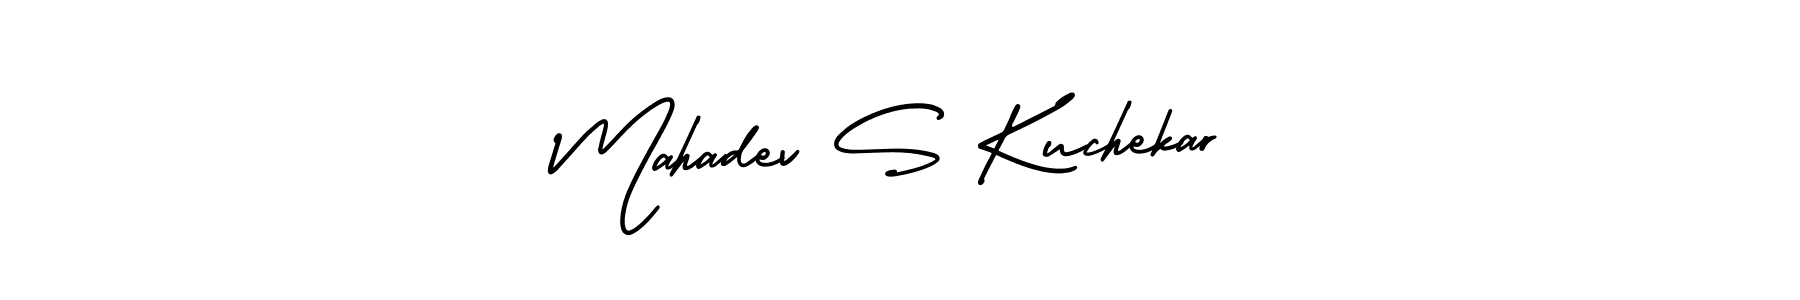 Use a signature maker to create a handwritten signature online. With this signature software, you can design (AmerikaSignatureDemo-Regular) your own signature for name Mahadev S Kuchekar. Mahadev S Kuchekar signature style 3 images and pictures png